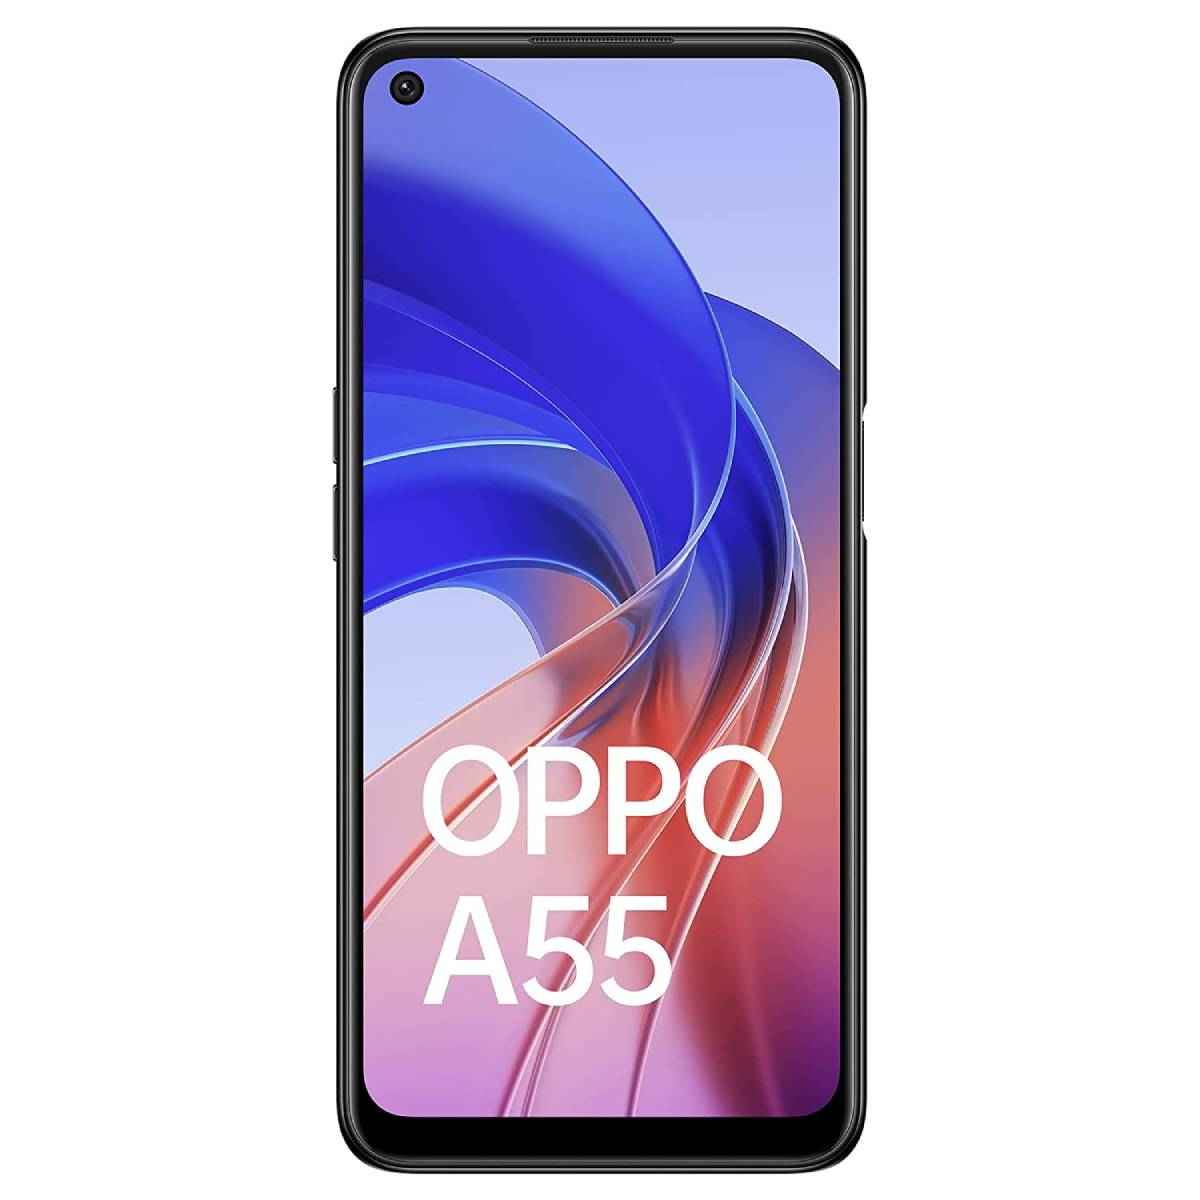 Oppo A55 5G